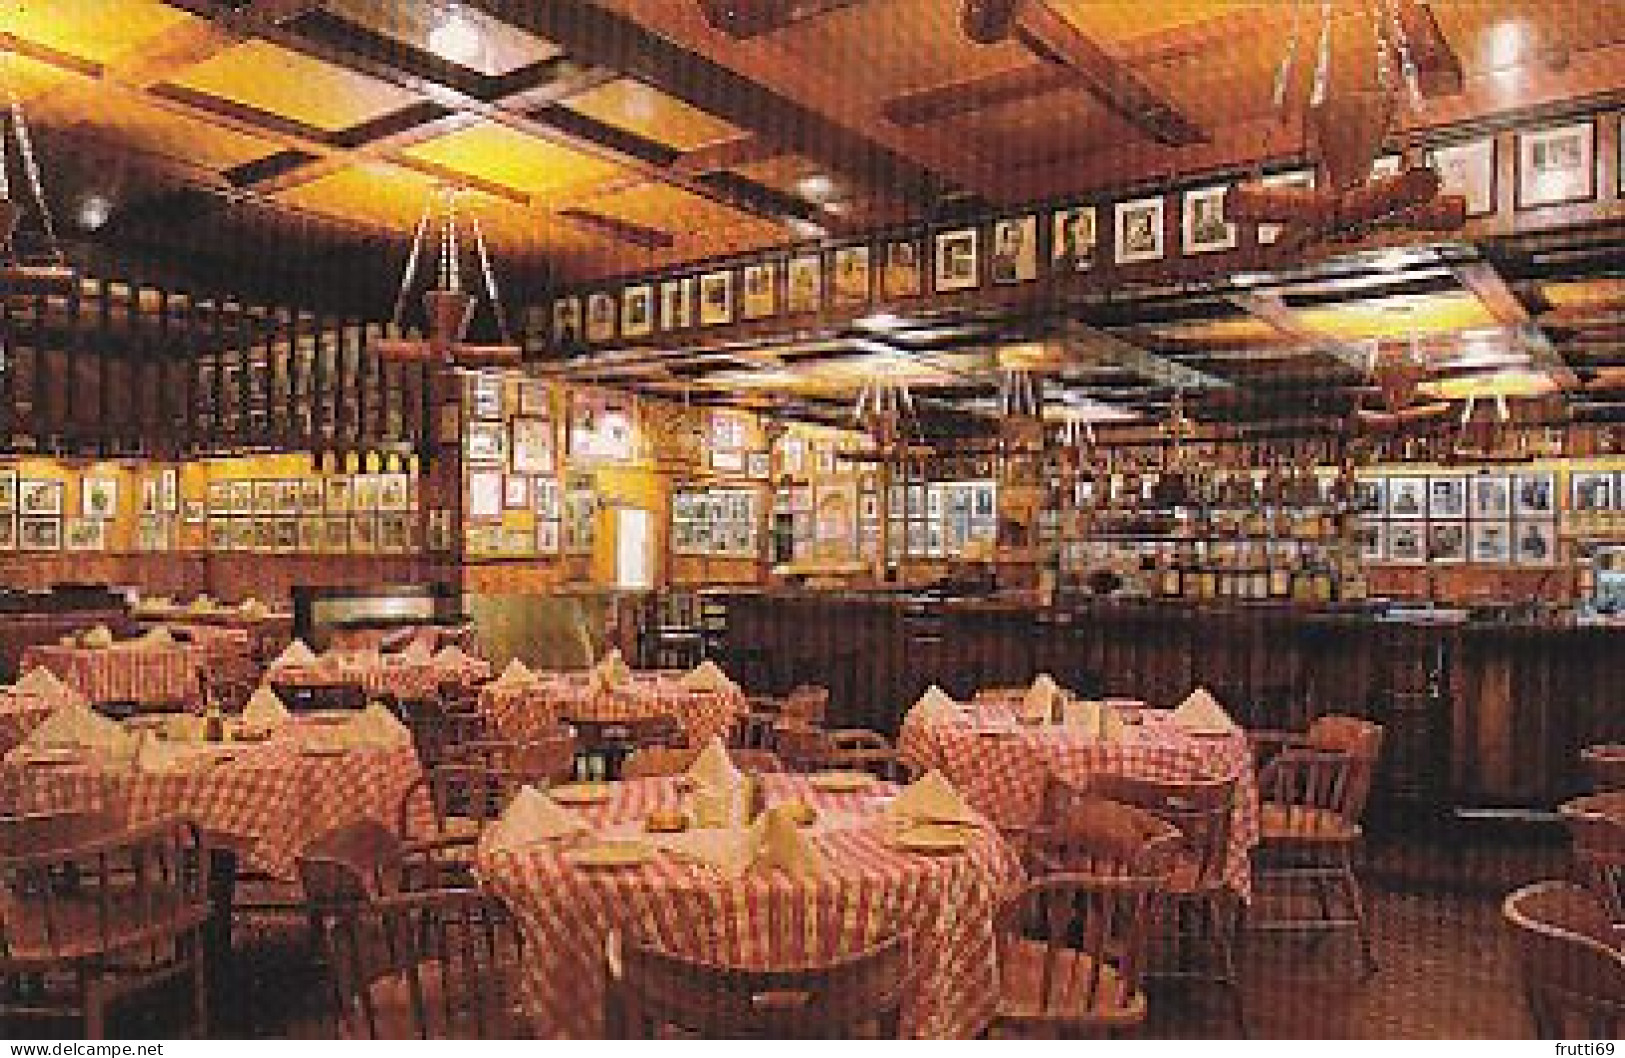 AK 183181 USA - New York City - Gallagher's Steak House - Cafes, Hotels & Restaurants